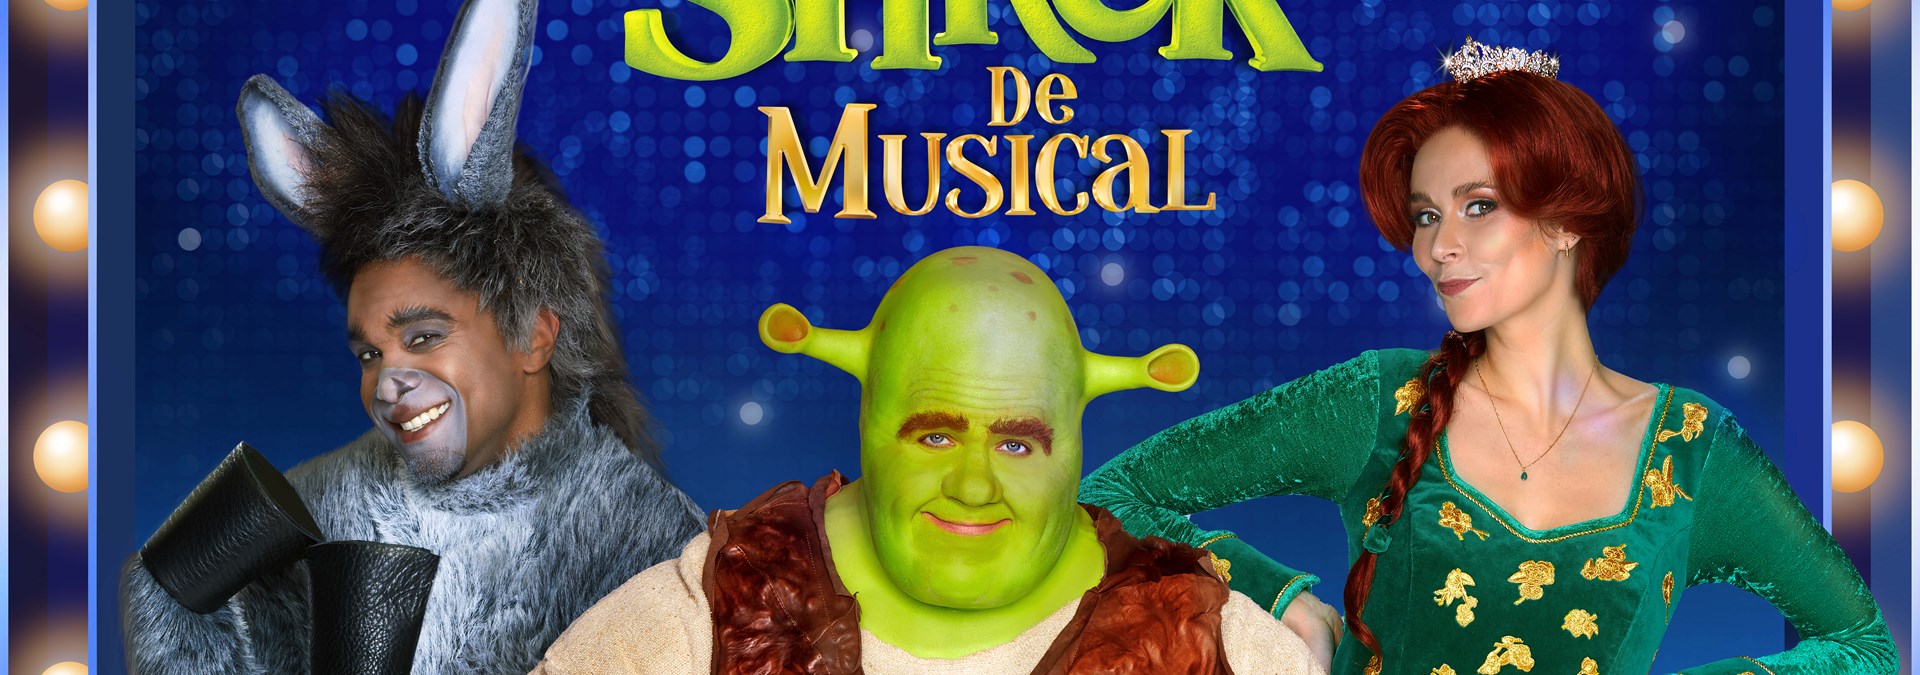 Mei02&03 GZ Promobeeld Shrek De Musical Liggend F Van Hoorne Studios En Dreamworks PF